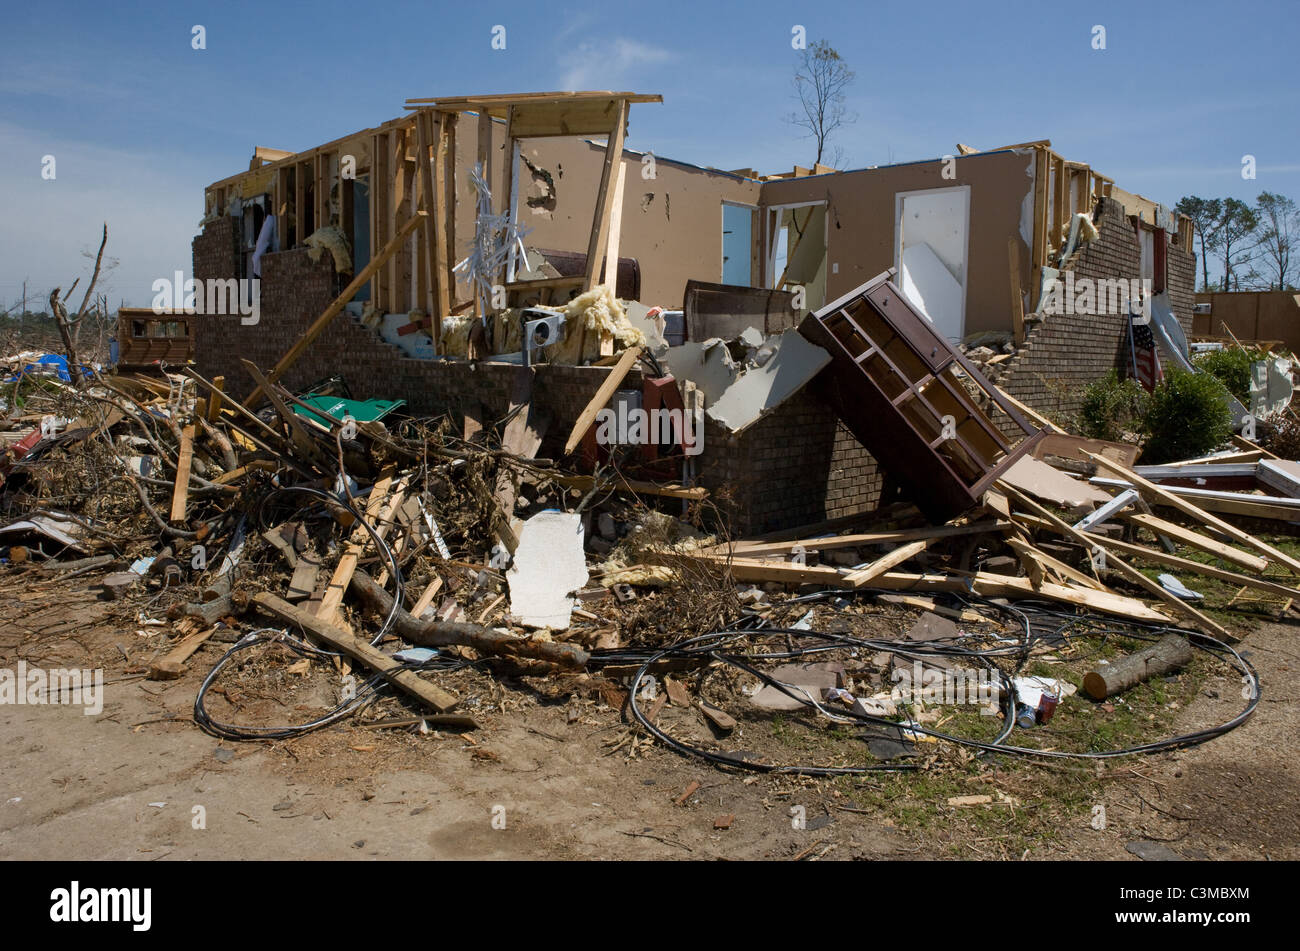 House hit by tornado in Tuscaloosa Alabama, USA, May 2011 Stock Photo